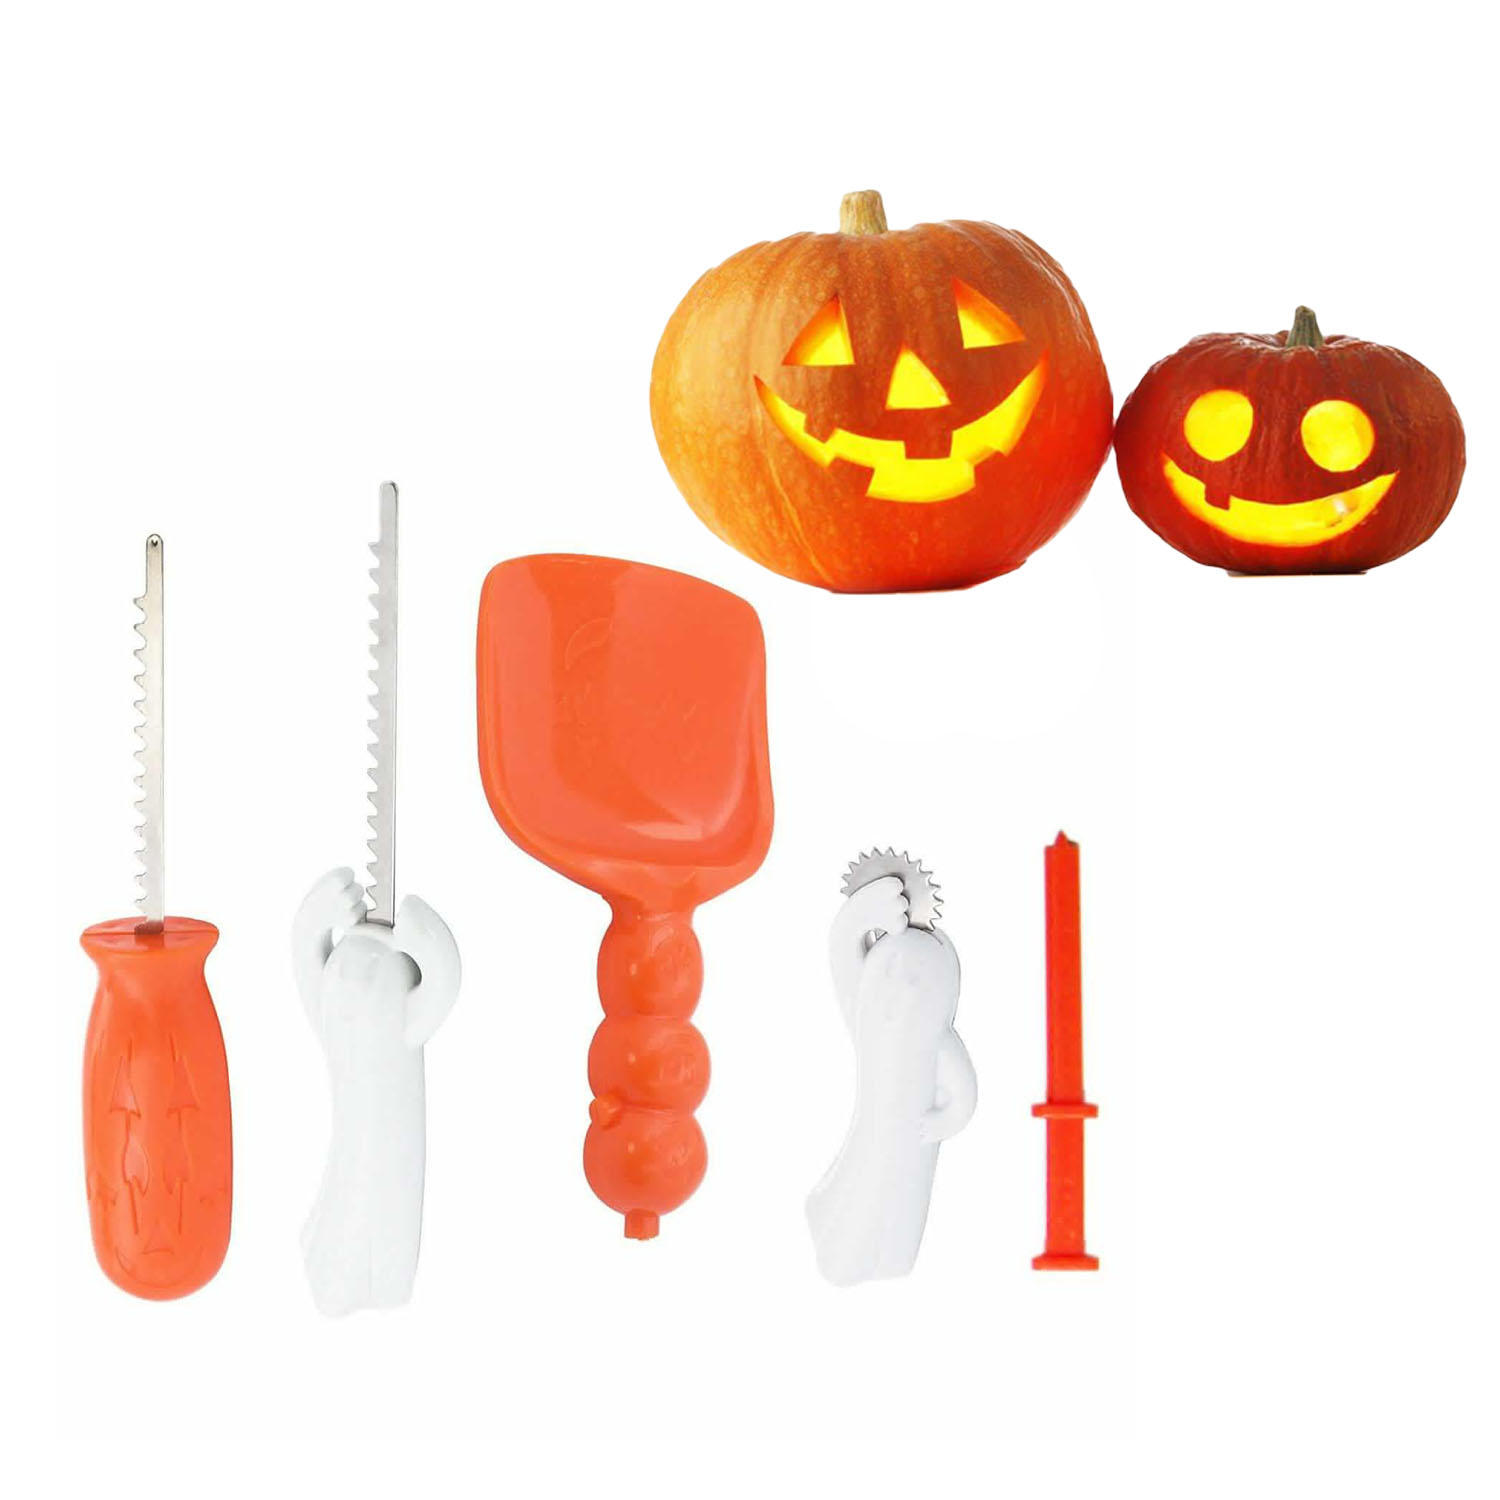 Halloween Pumpkin Carving Tools 5 Piece Set Halloween Carving Kit 5 Carving Tools Kids and Party